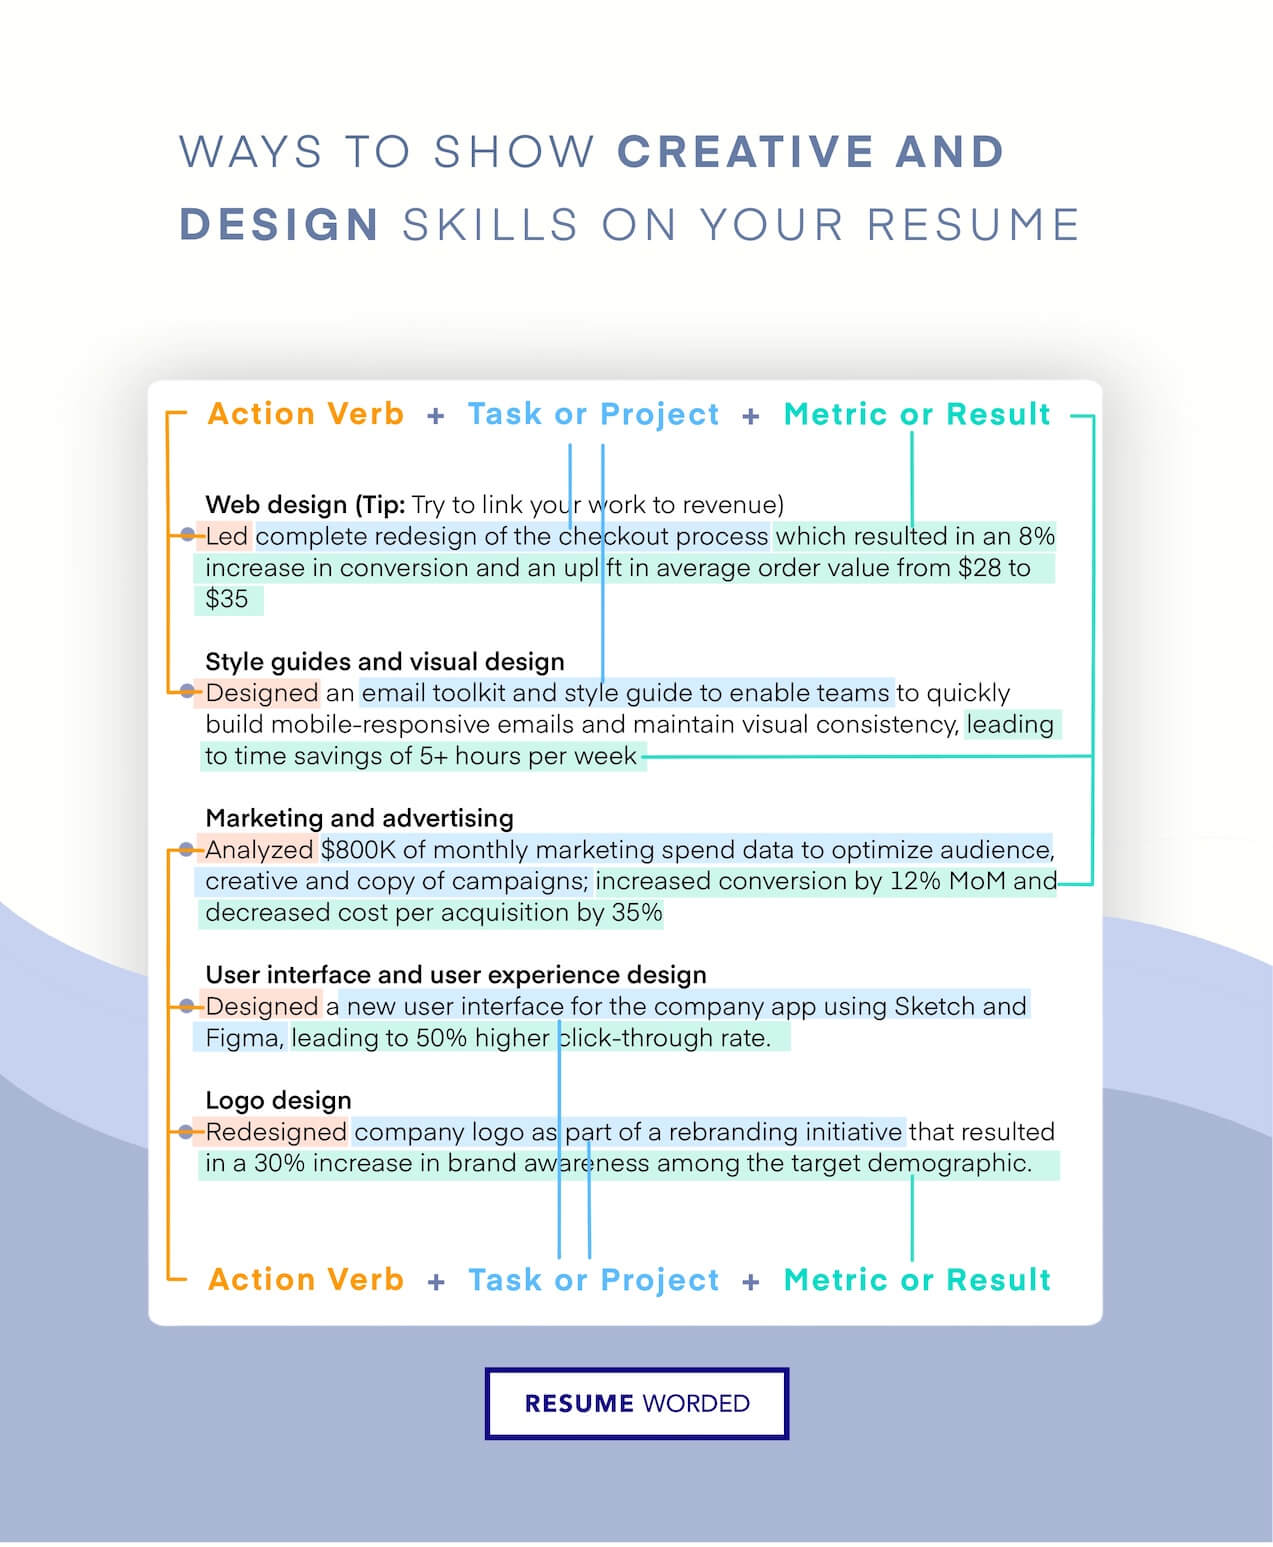 Showcase proficiency in design software - Entry Level Interior Designer Resume